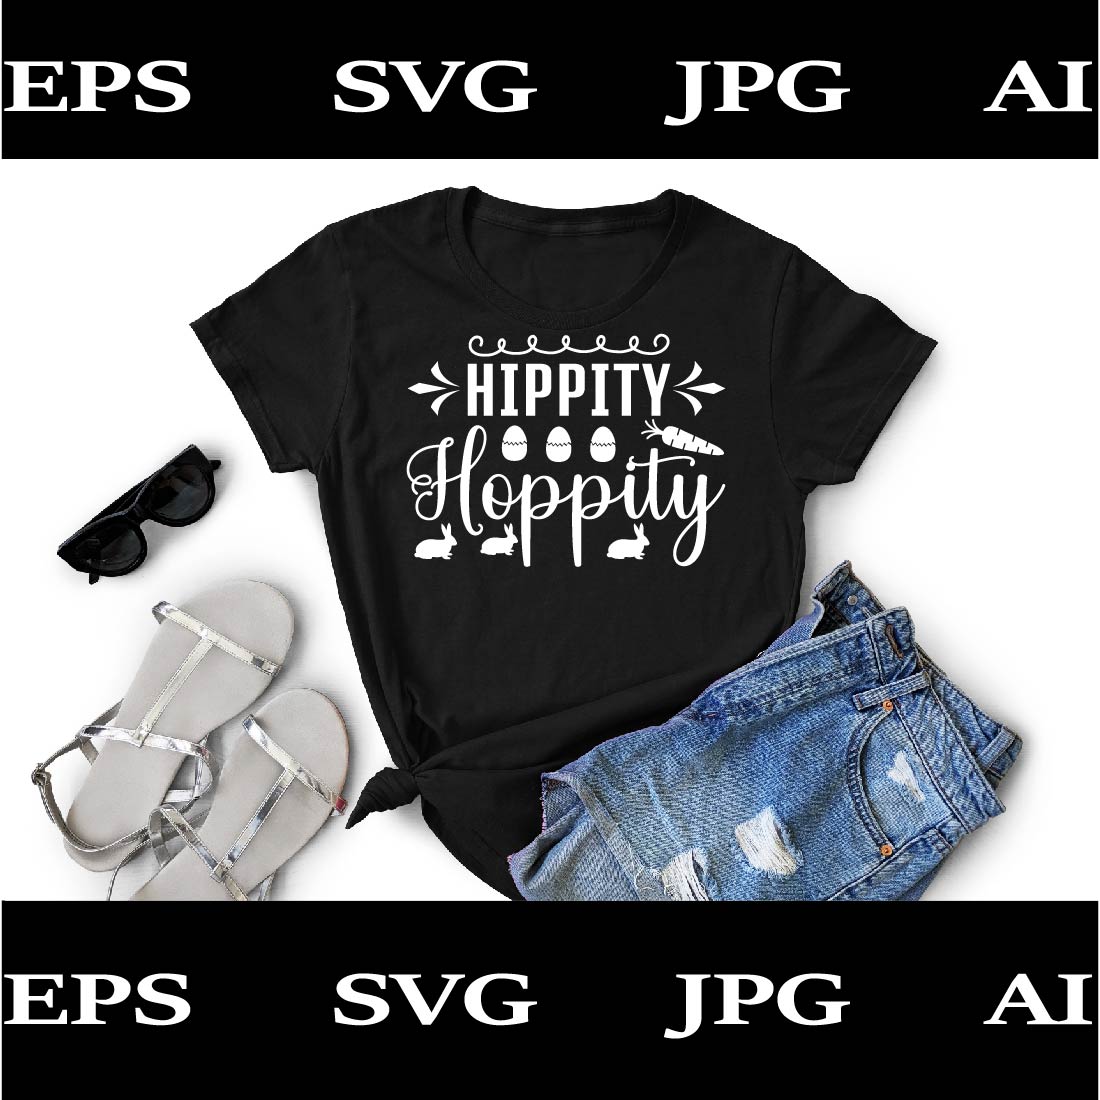 Hippity Hoppity Svg Cut File Design preview image.